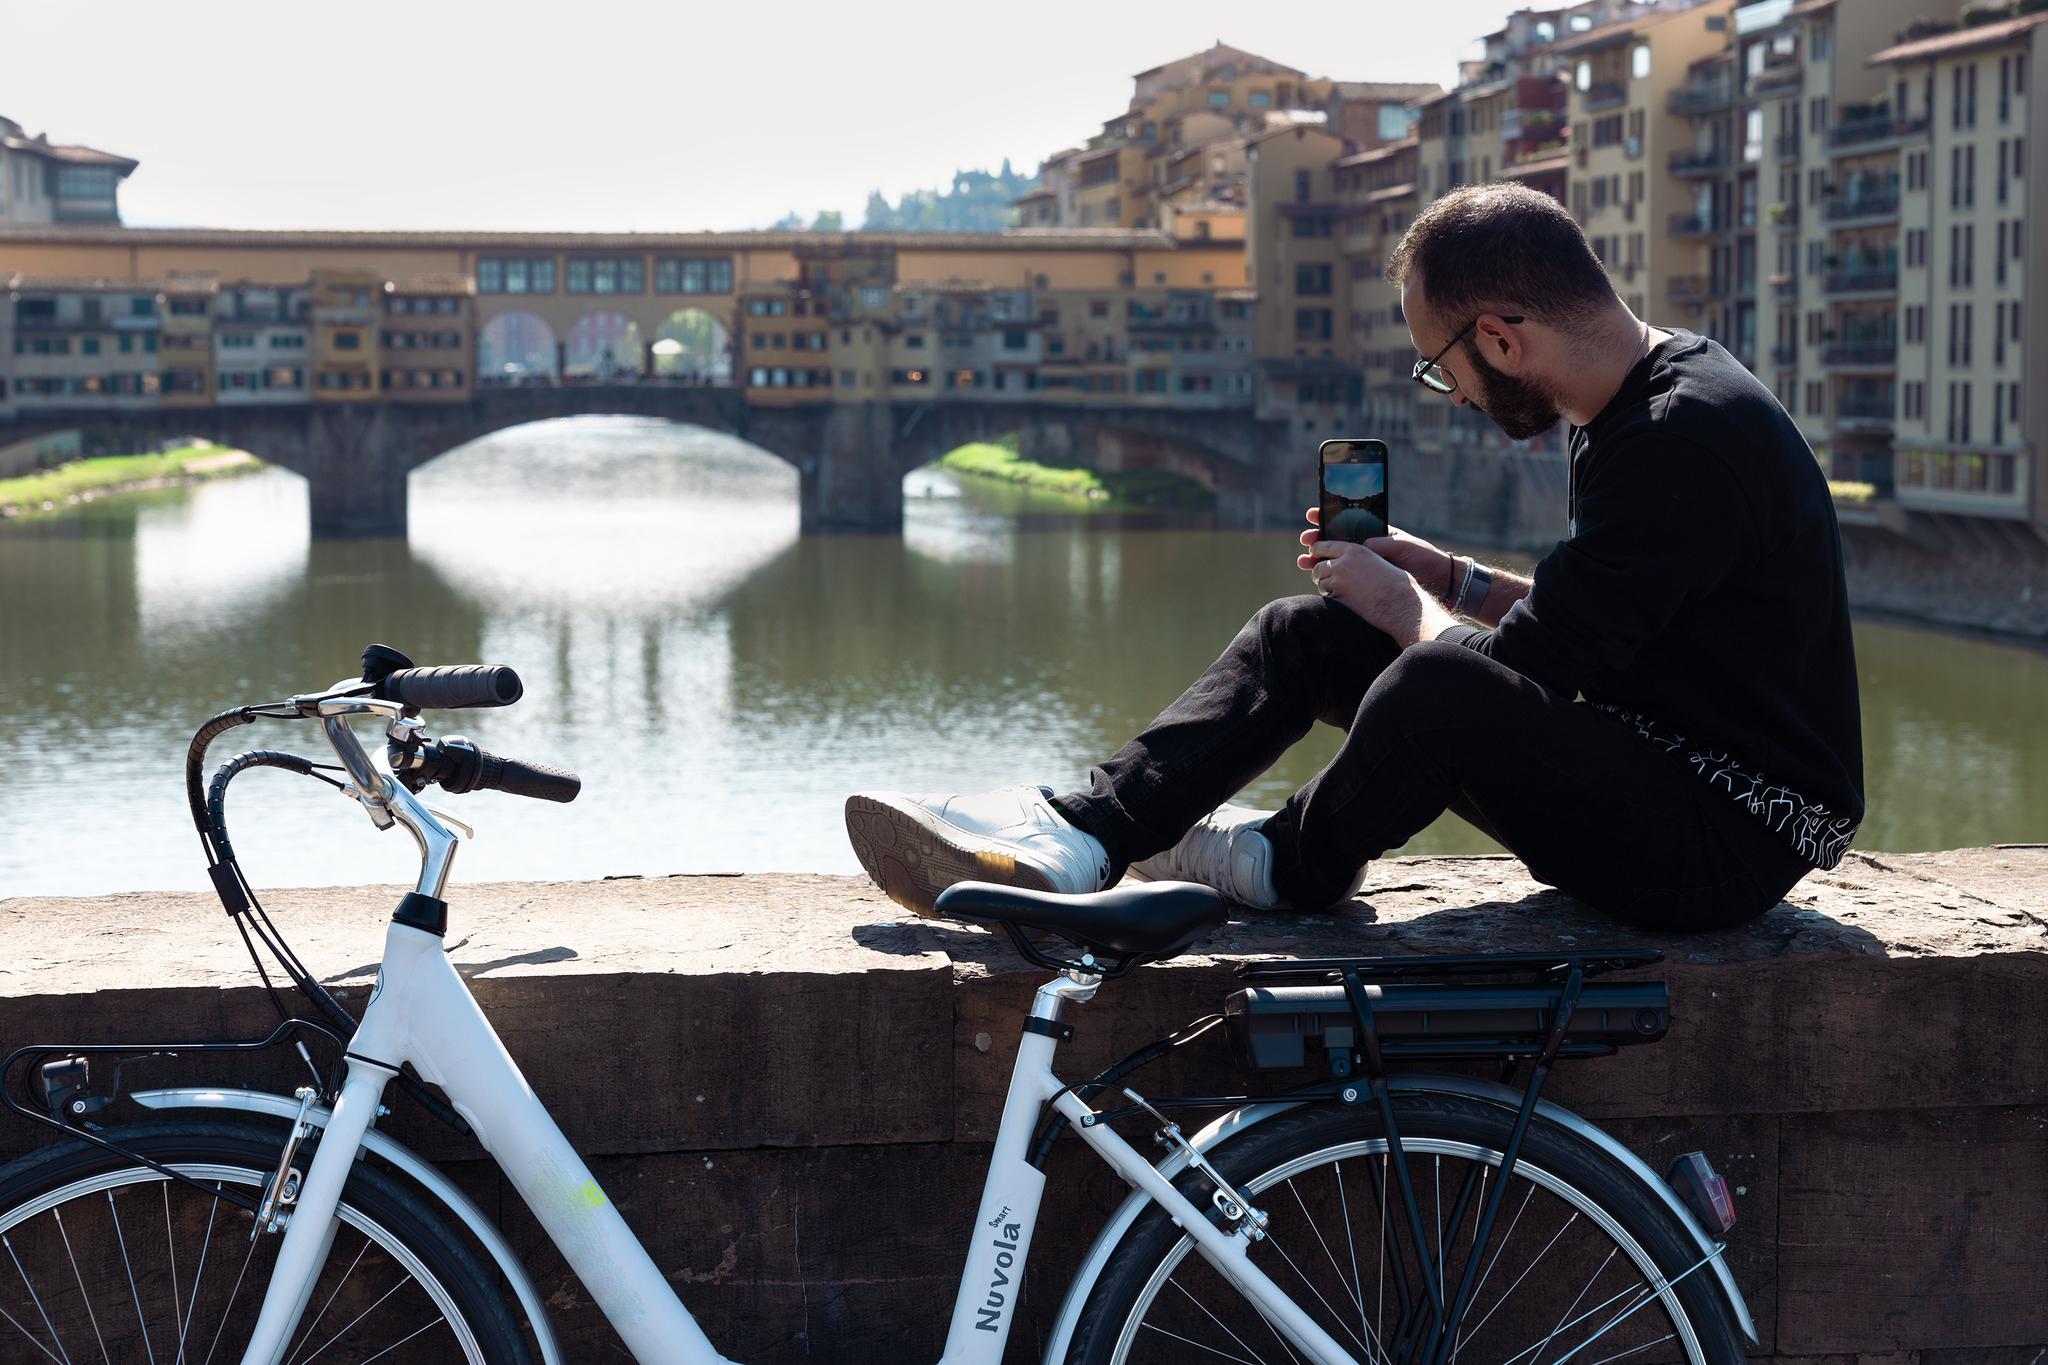 E-Bike Tour a Firenze e dintorni